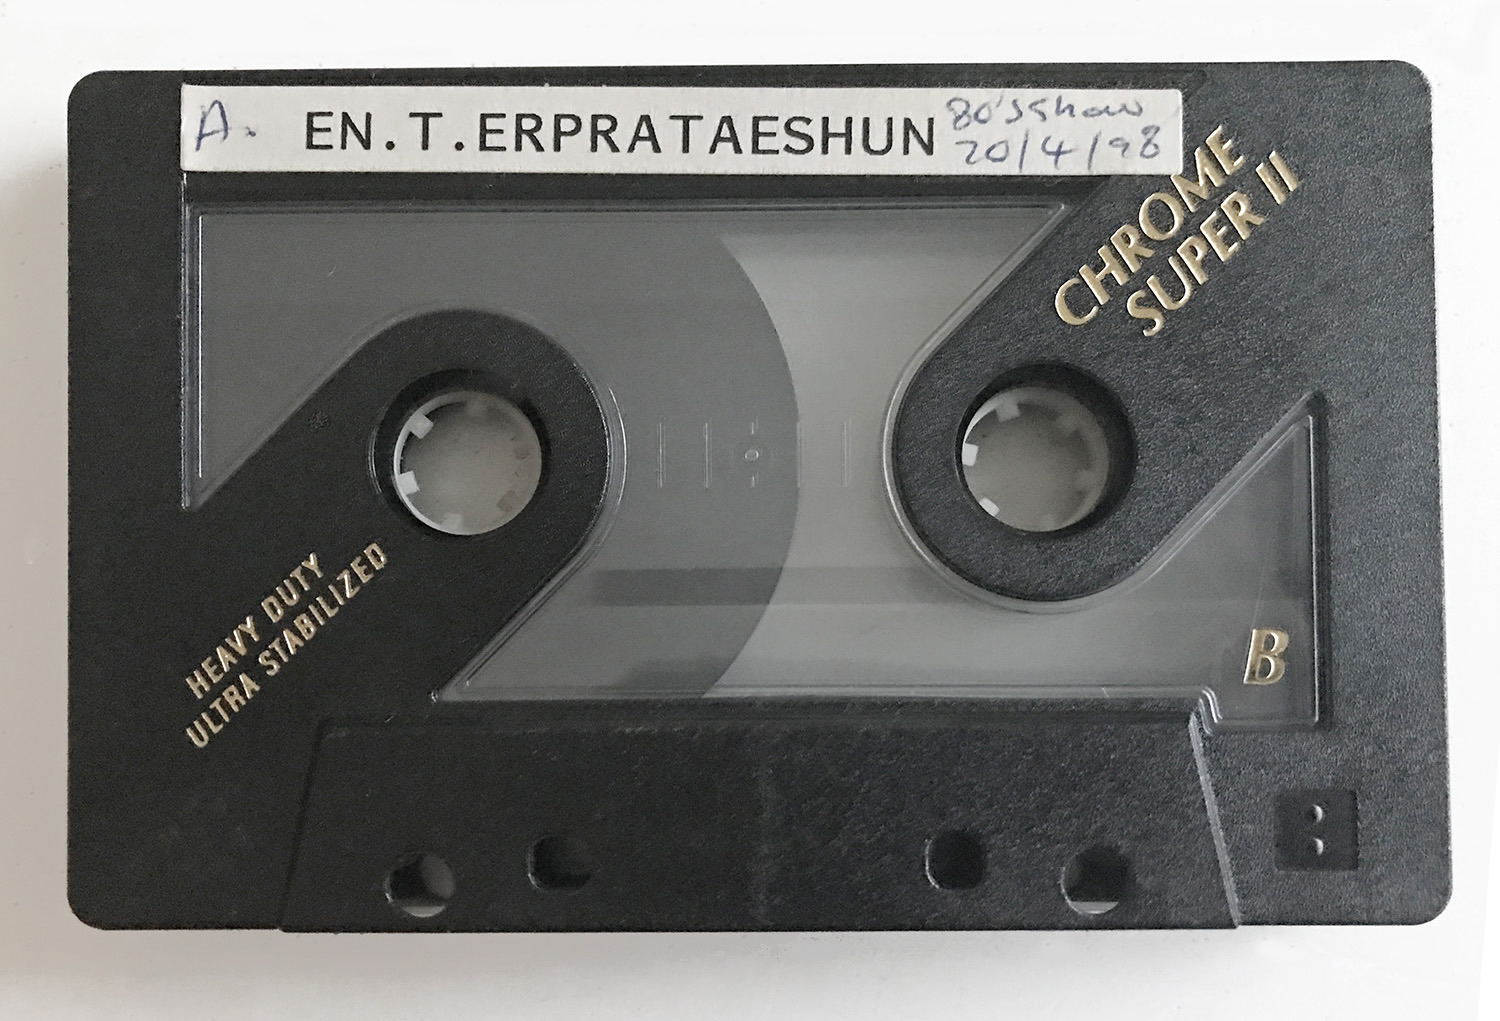 MS165 tape